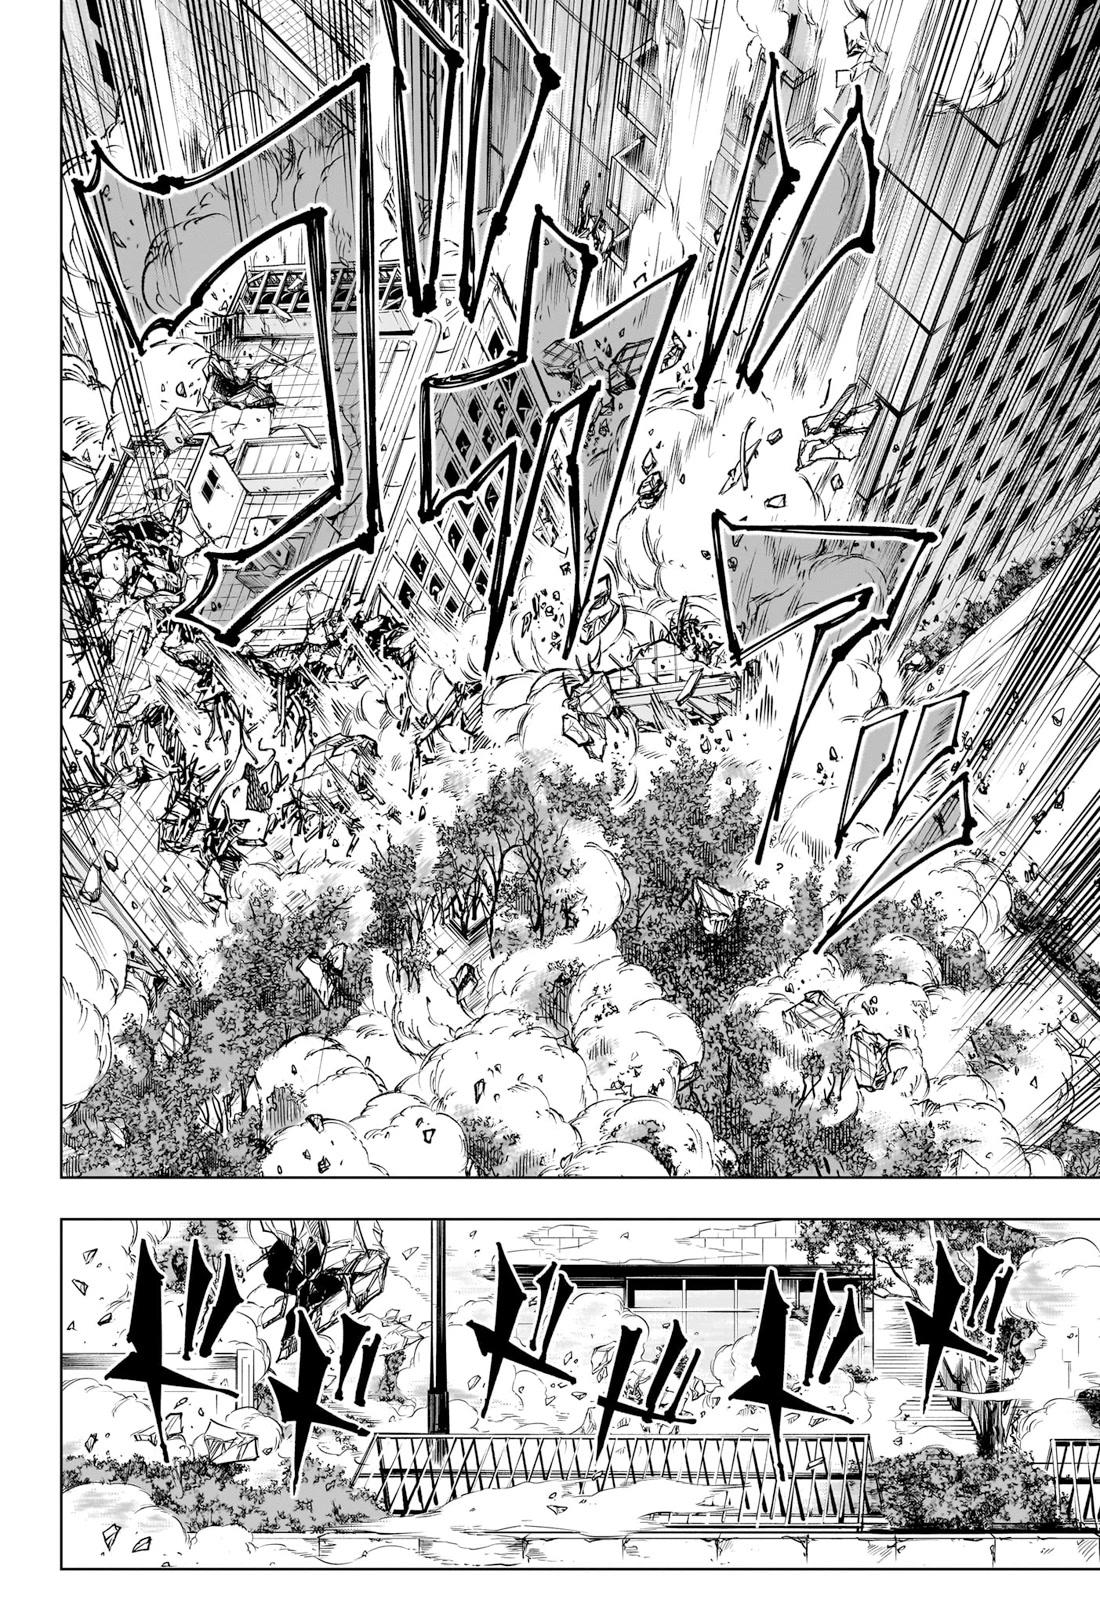 Jujutsu Kaisen Chapter 224: The Decisive Battle In The Uninhabited, Demon-Infested Shinjuku ② page 19 - Mangakakalot